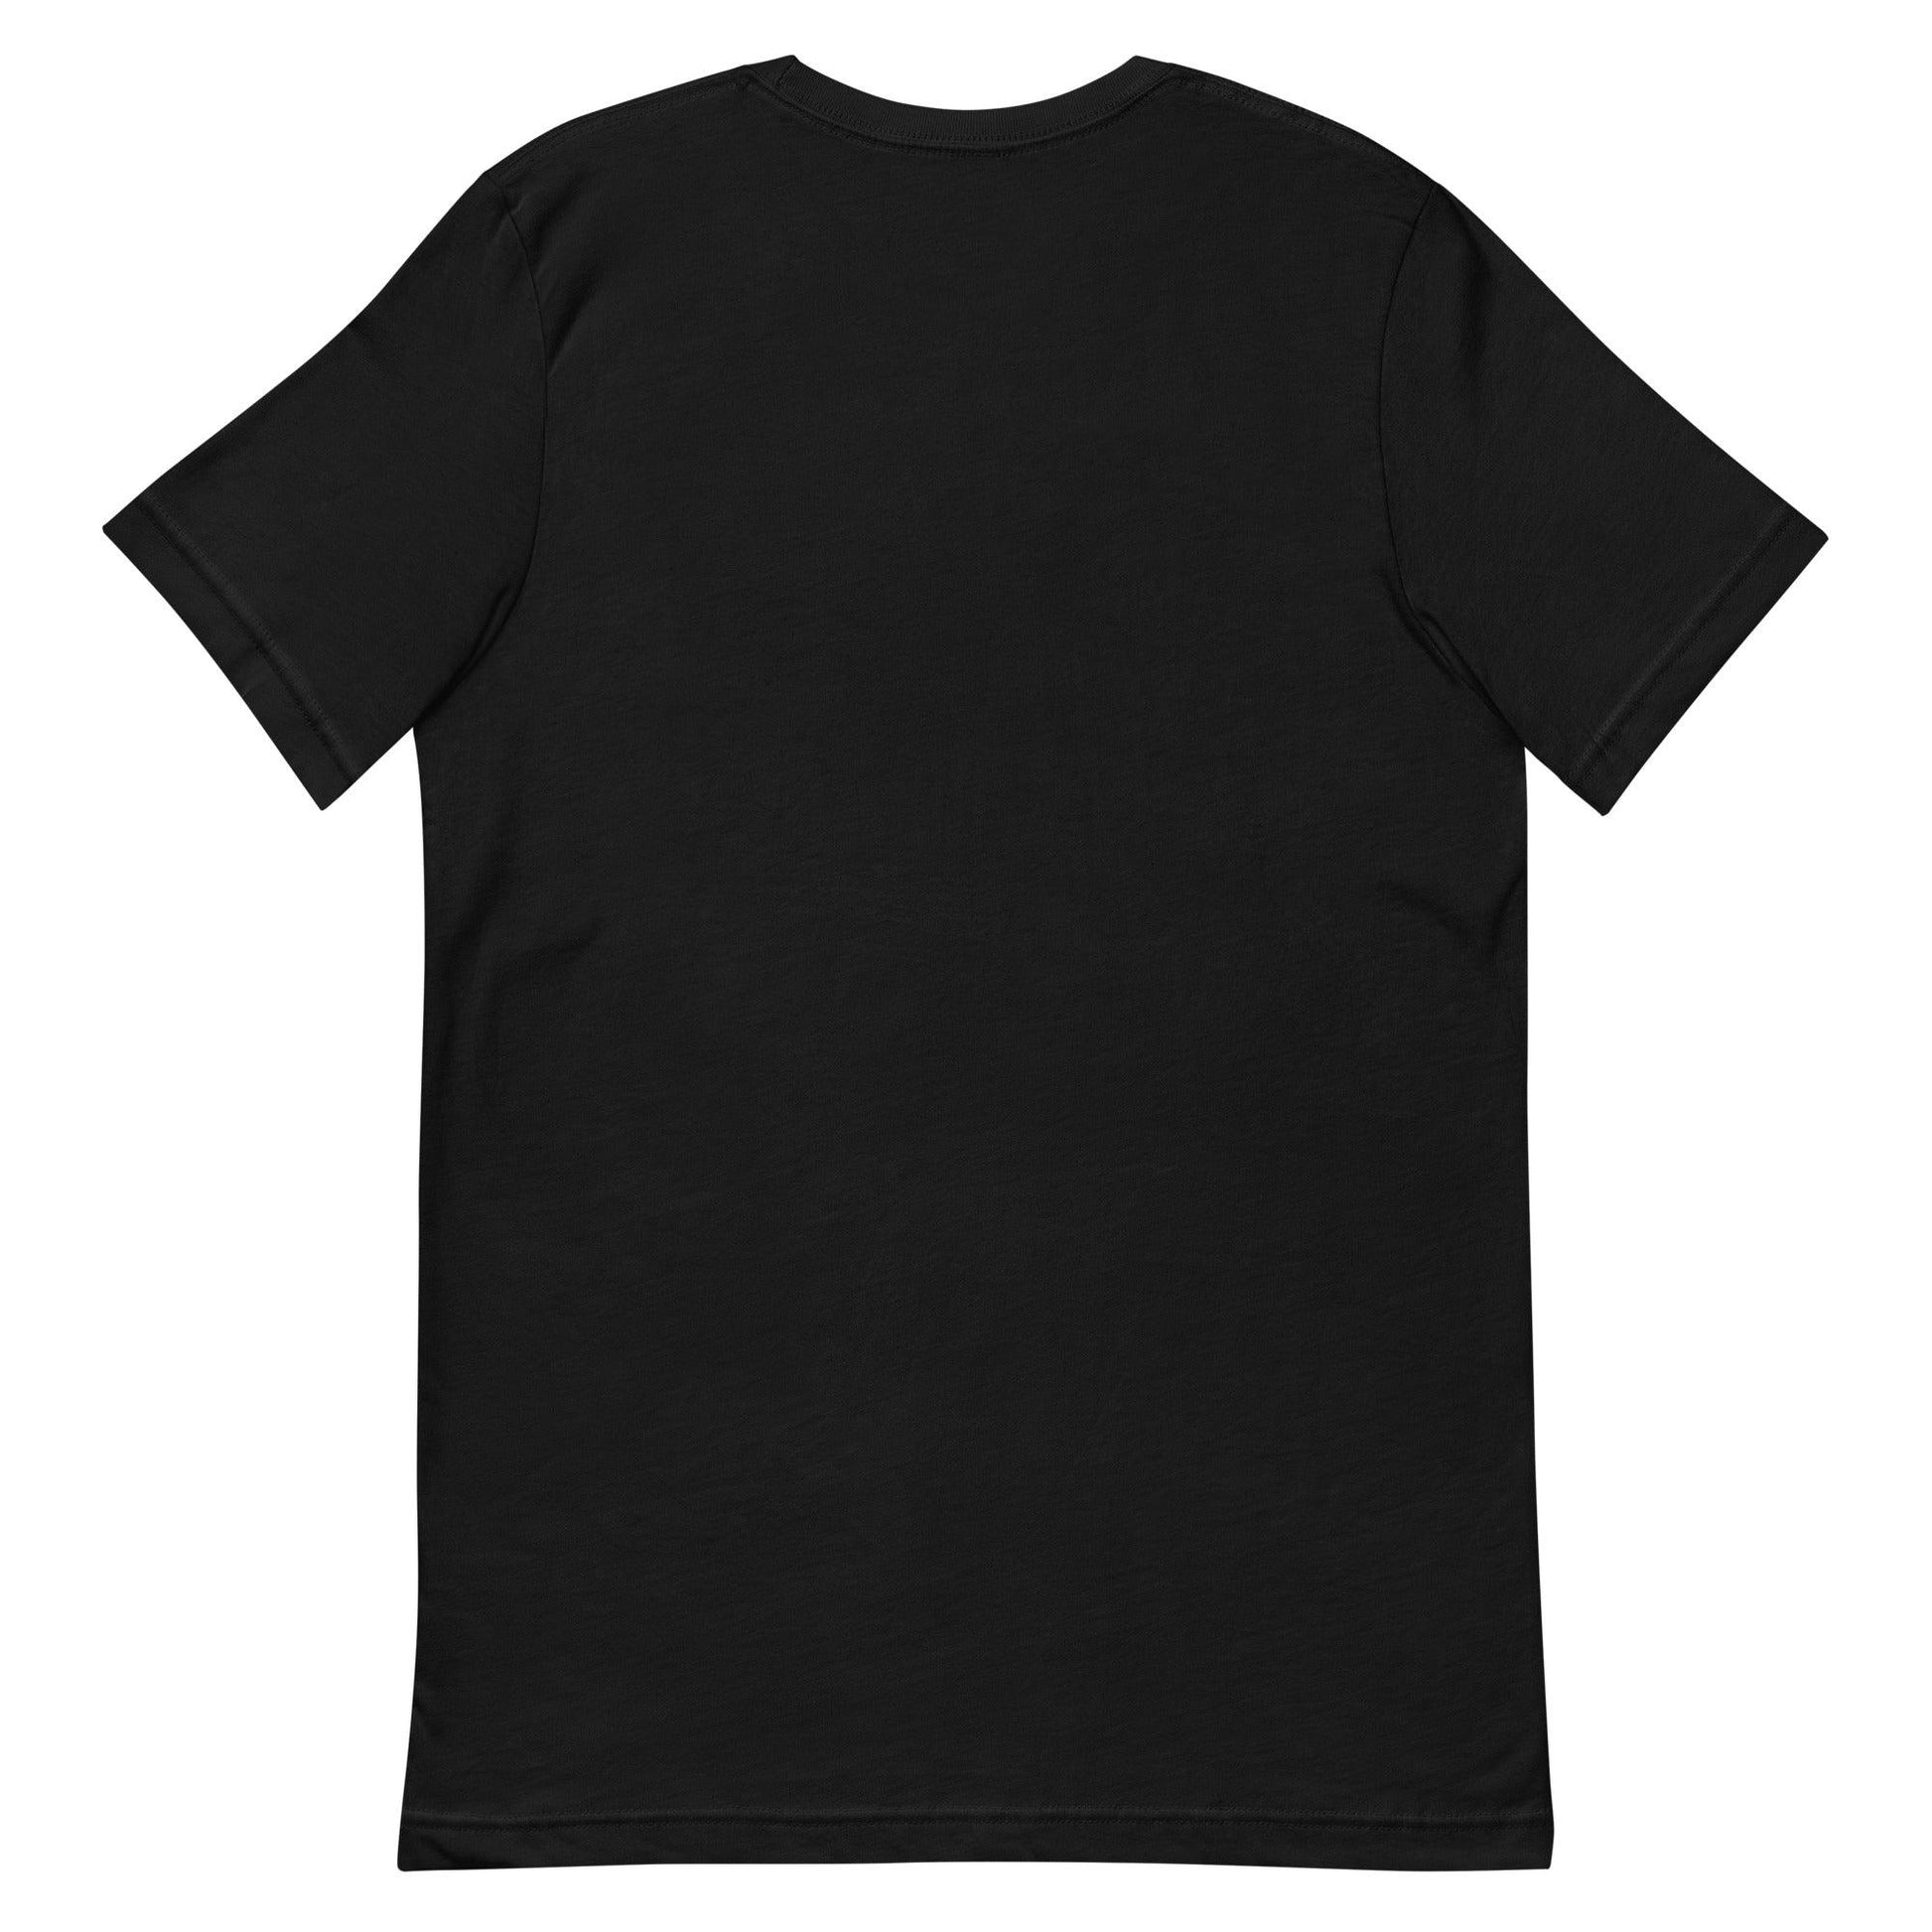 Let's Do This Boys Unisex T-Shirt - TheGivenGet